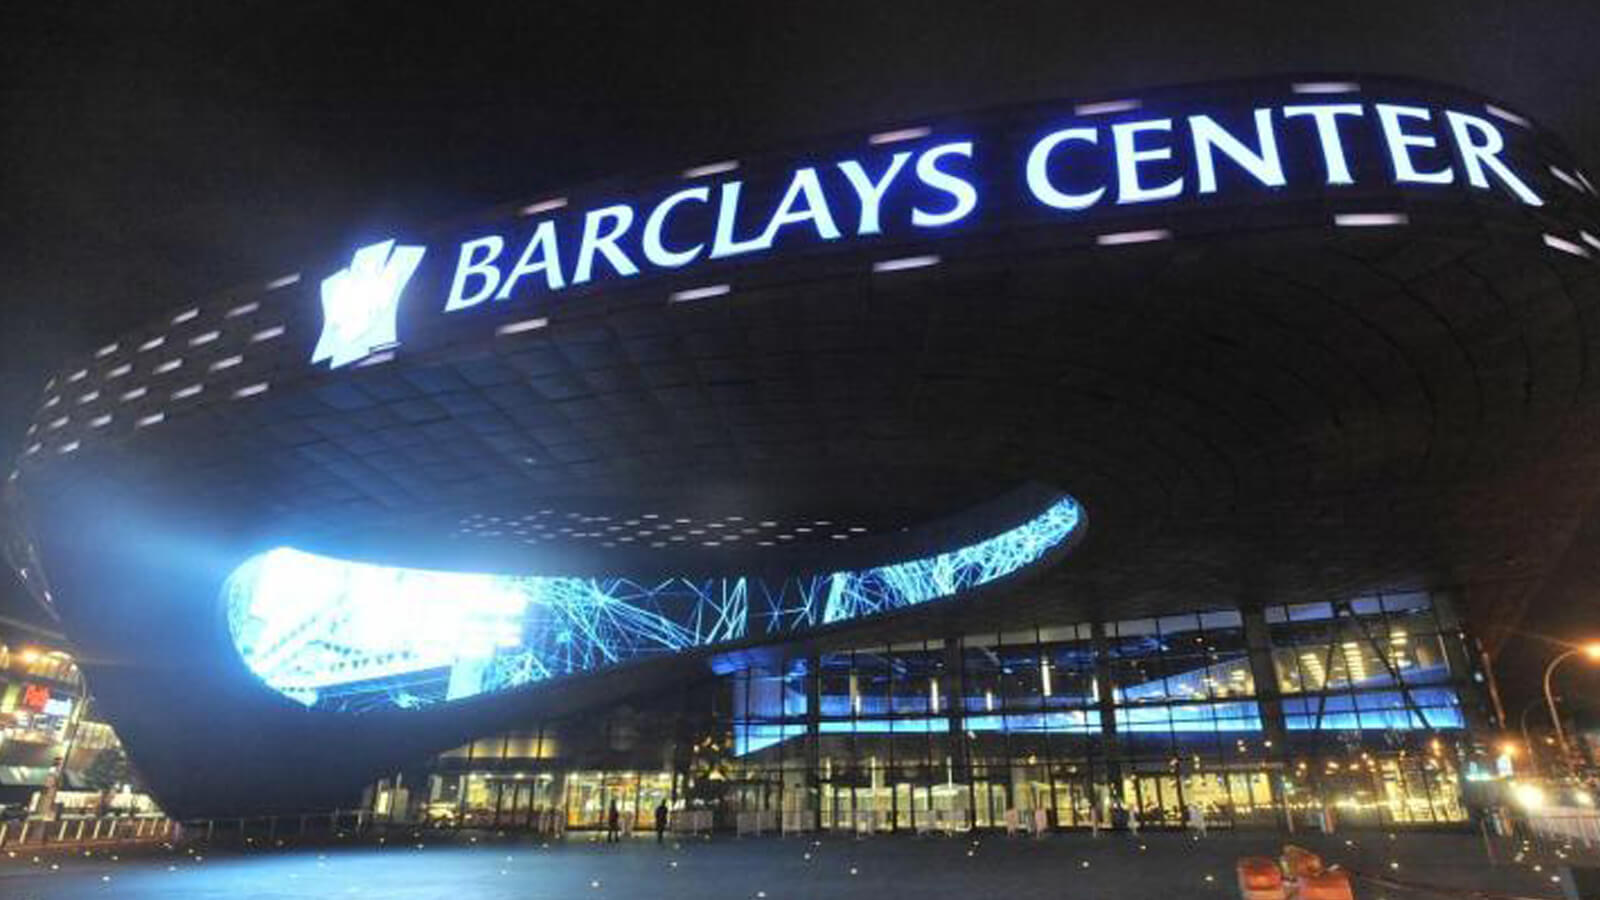 NBAバスケットチーム“ブルックリン・ネッツ”の本拠地「バークレイズ・センター」の名物LEDビジョン